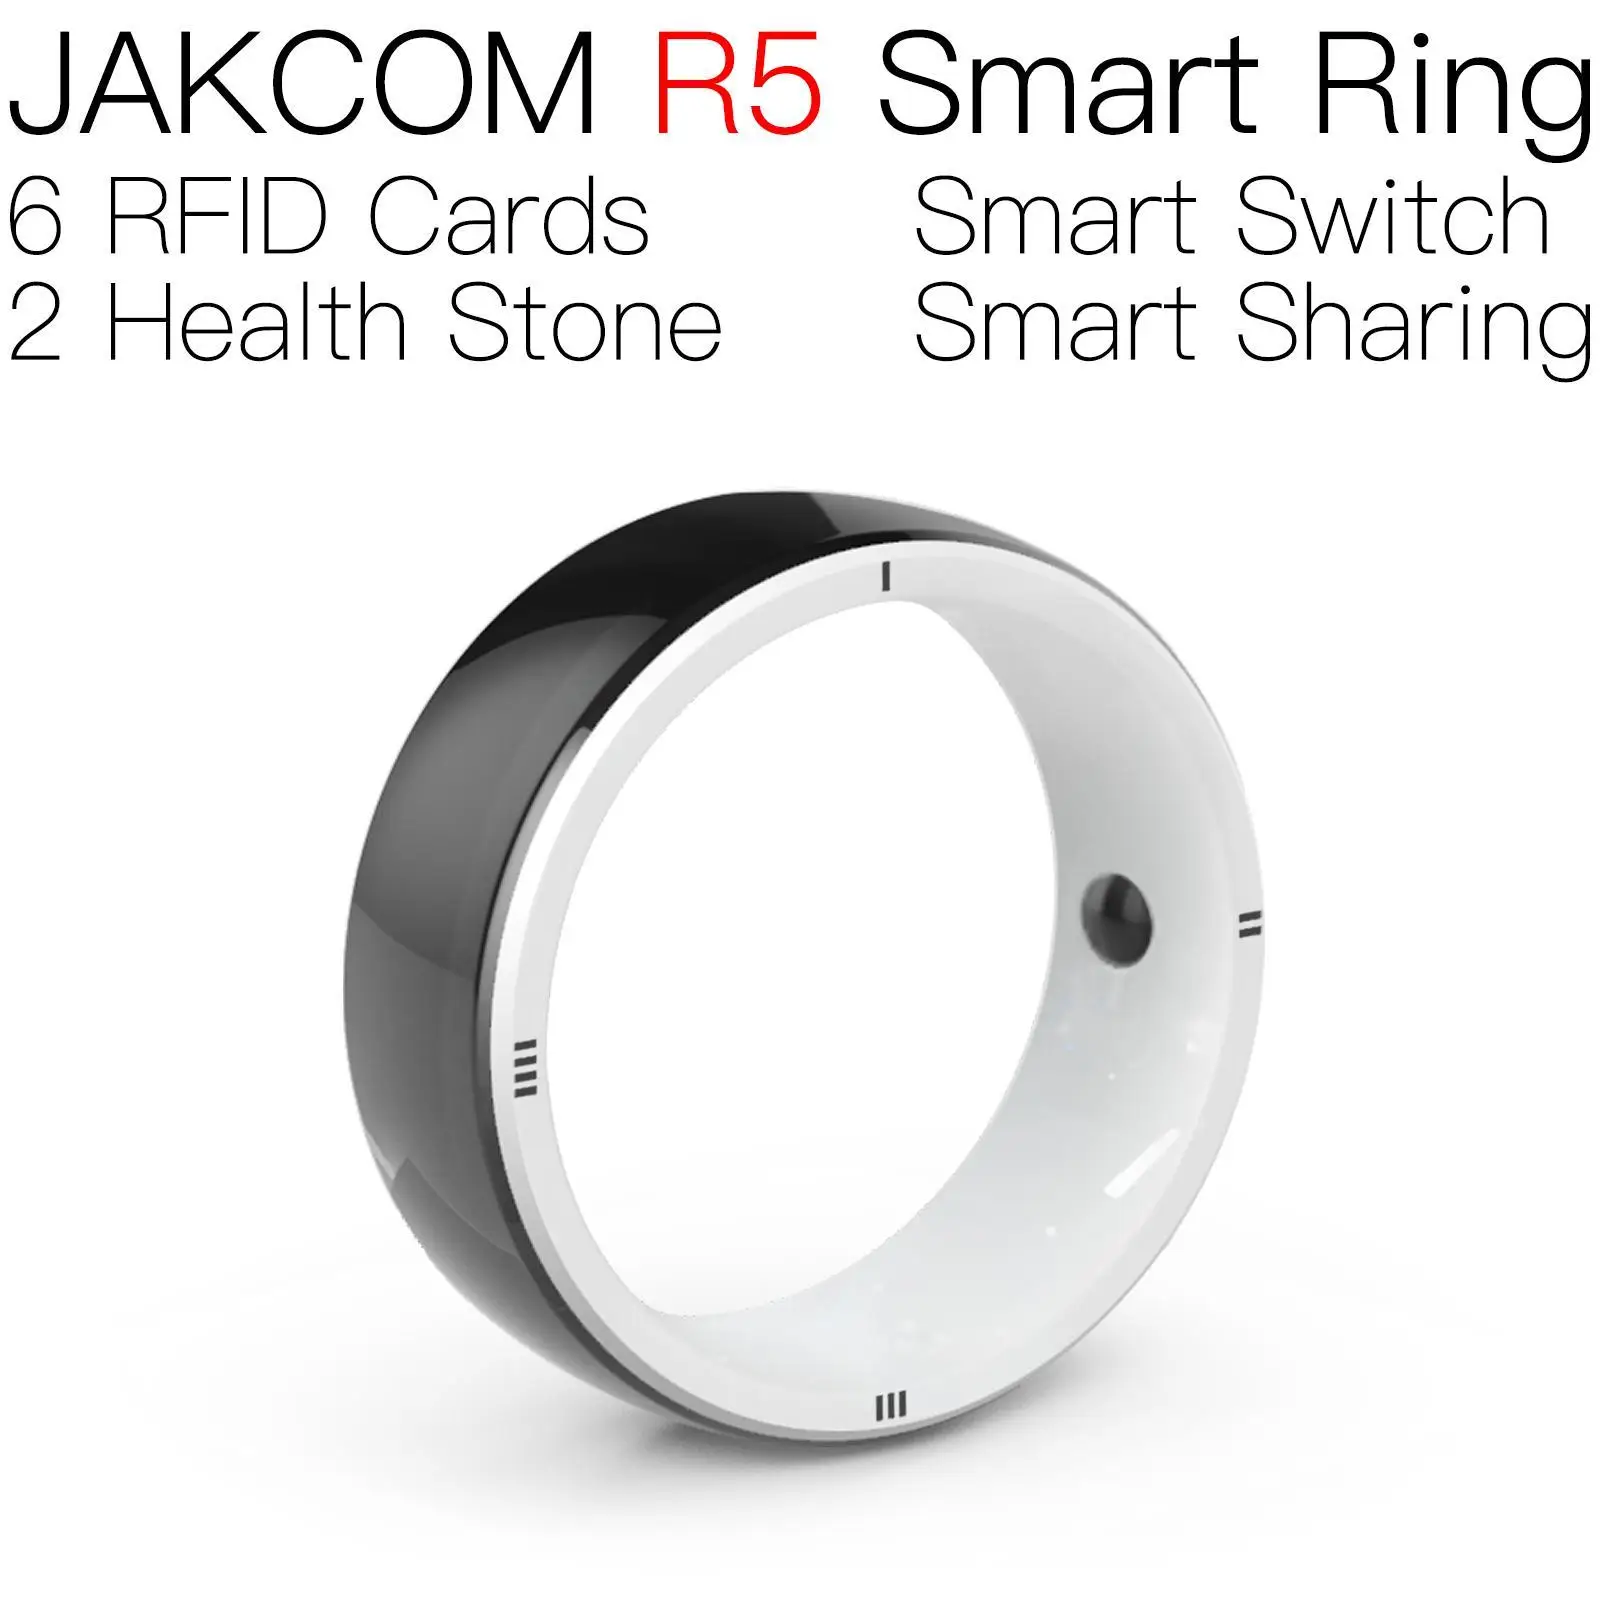 

JAKCOM R5 Smart Ring For men women t5577 card cui pet name tag s17 chip rfid nfc reader writer resetter pixma mg 2250 microchip